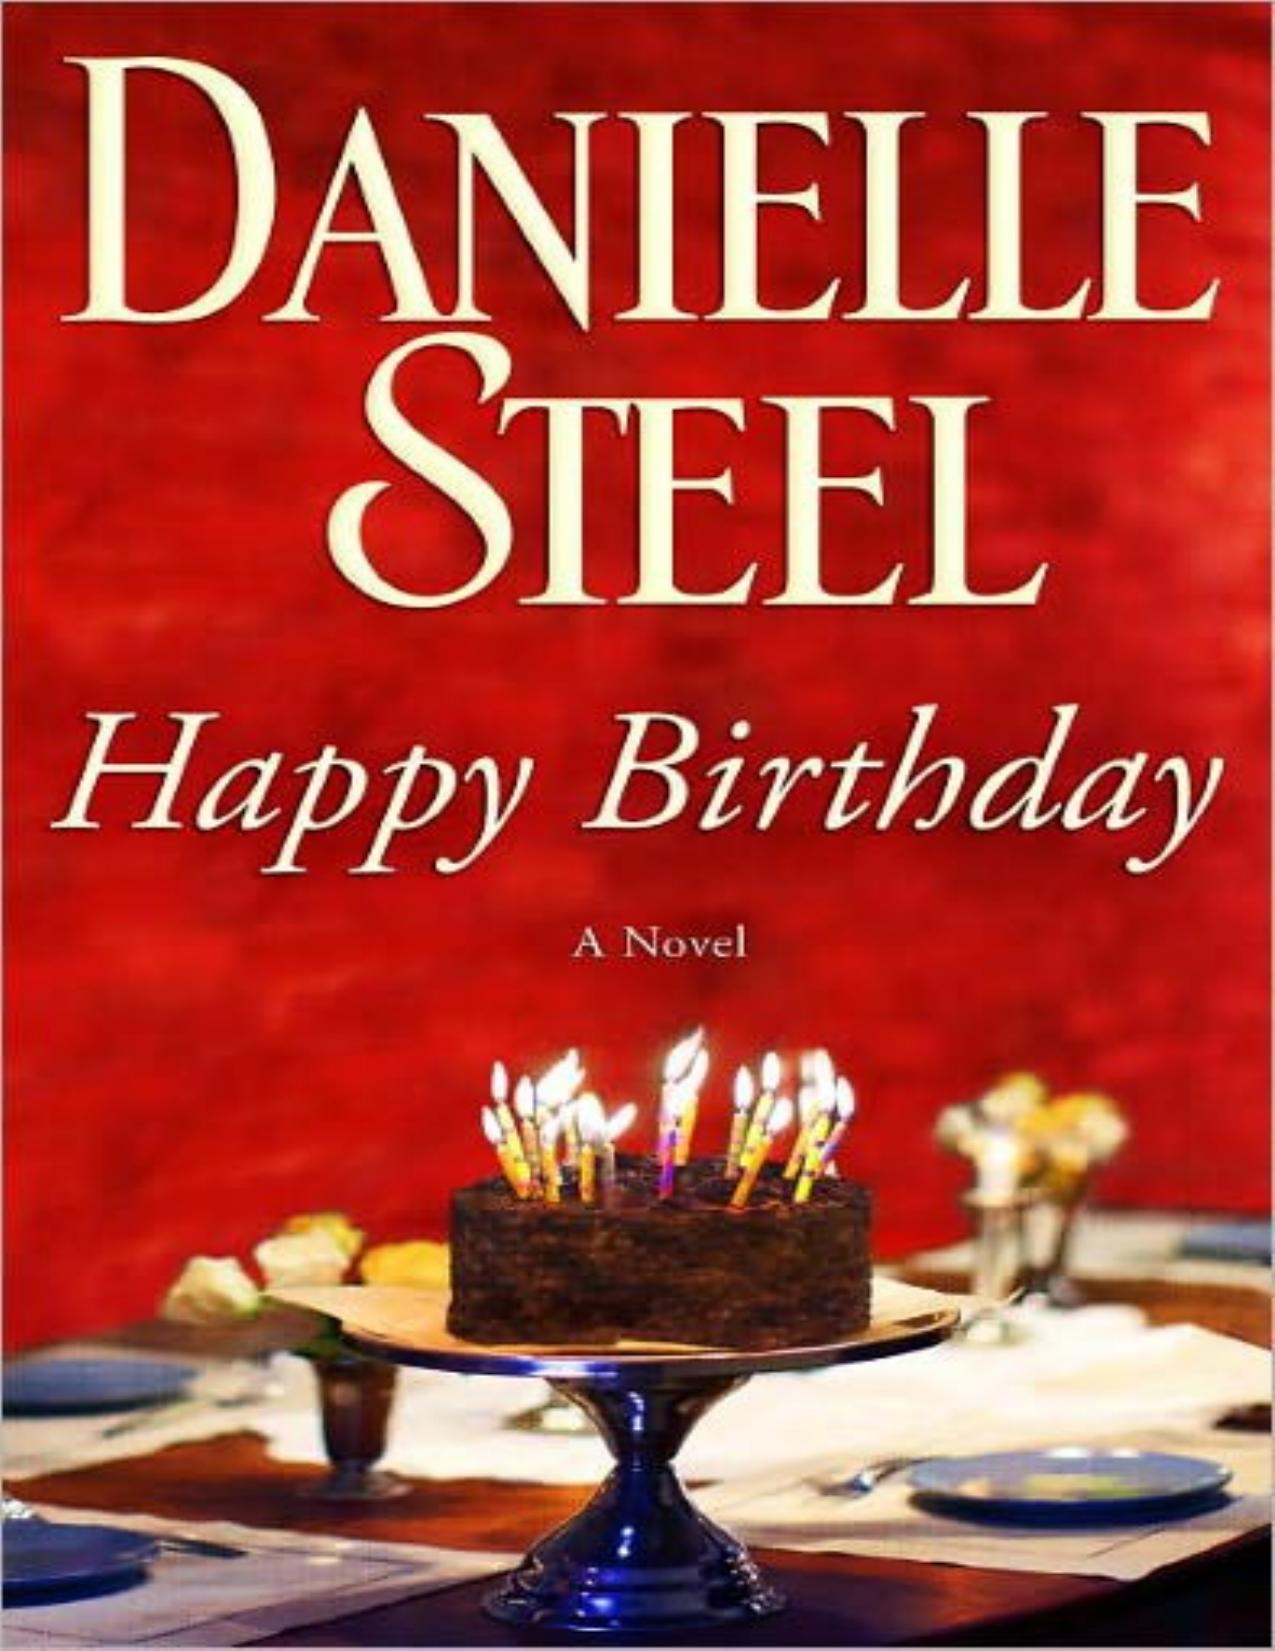 Happy Birthday: A Novel by Danielle Steel